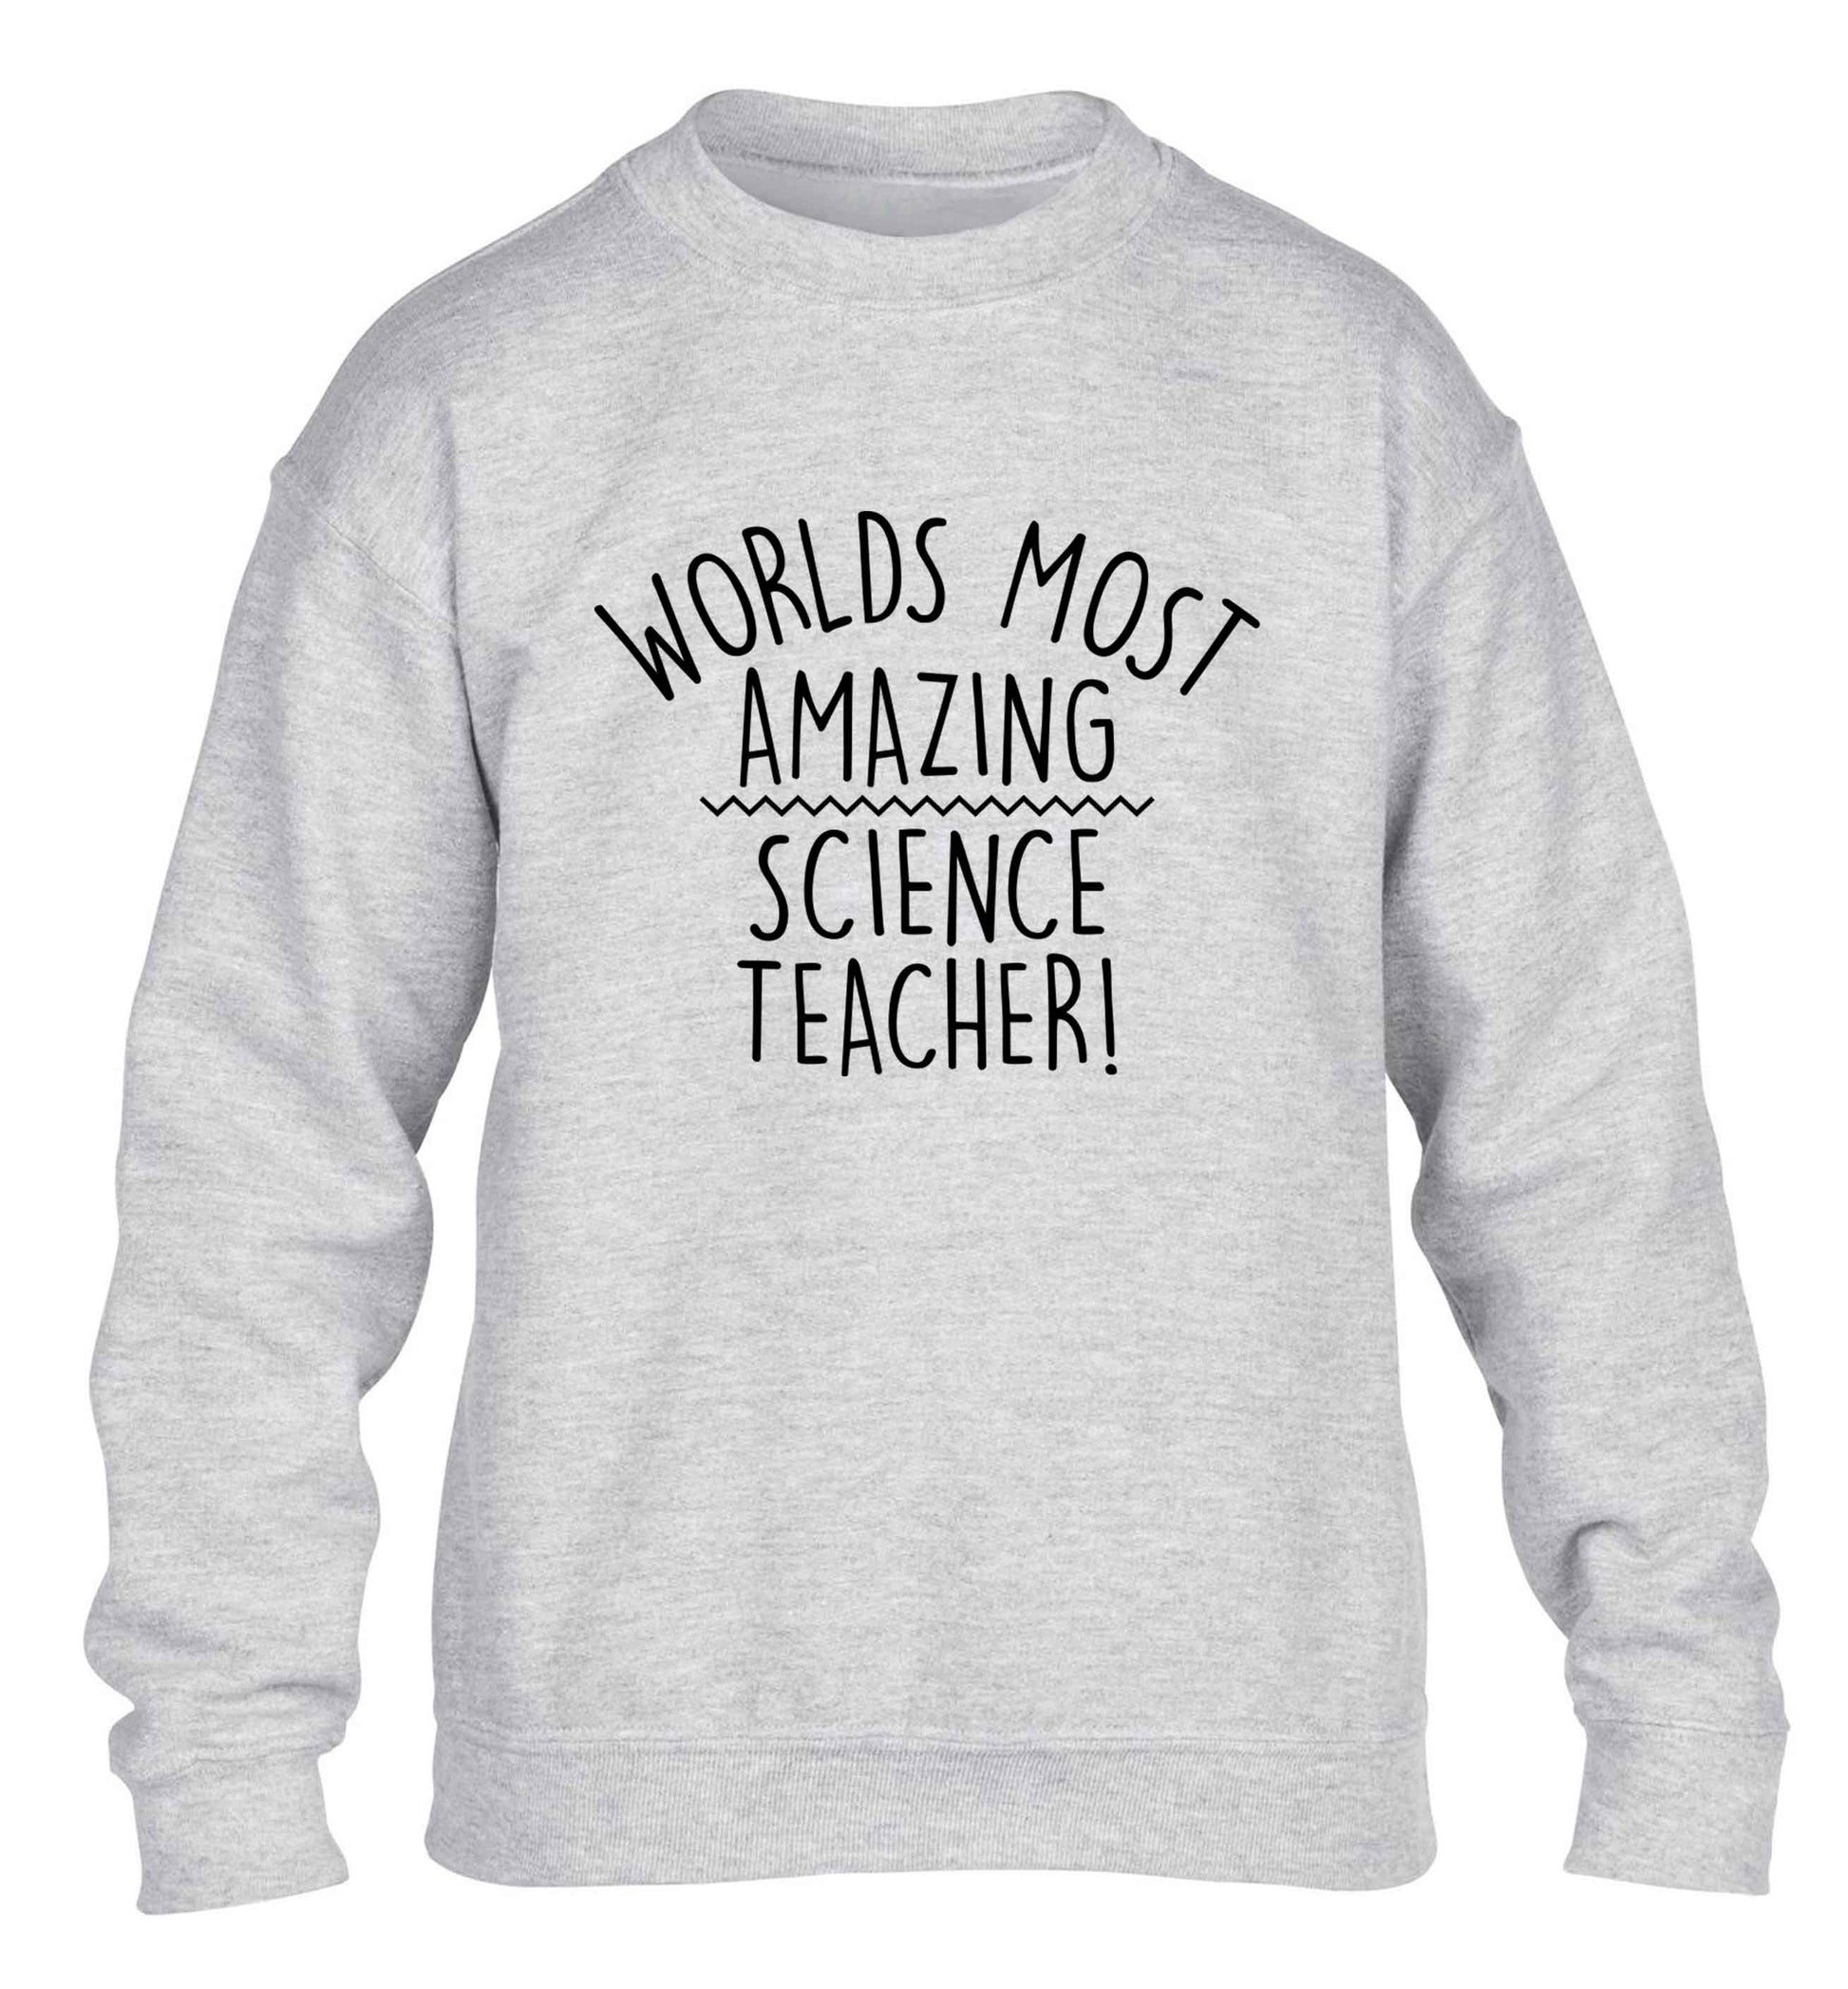 Worlds most amazing science teacher children's grey sweater 12-13 Years